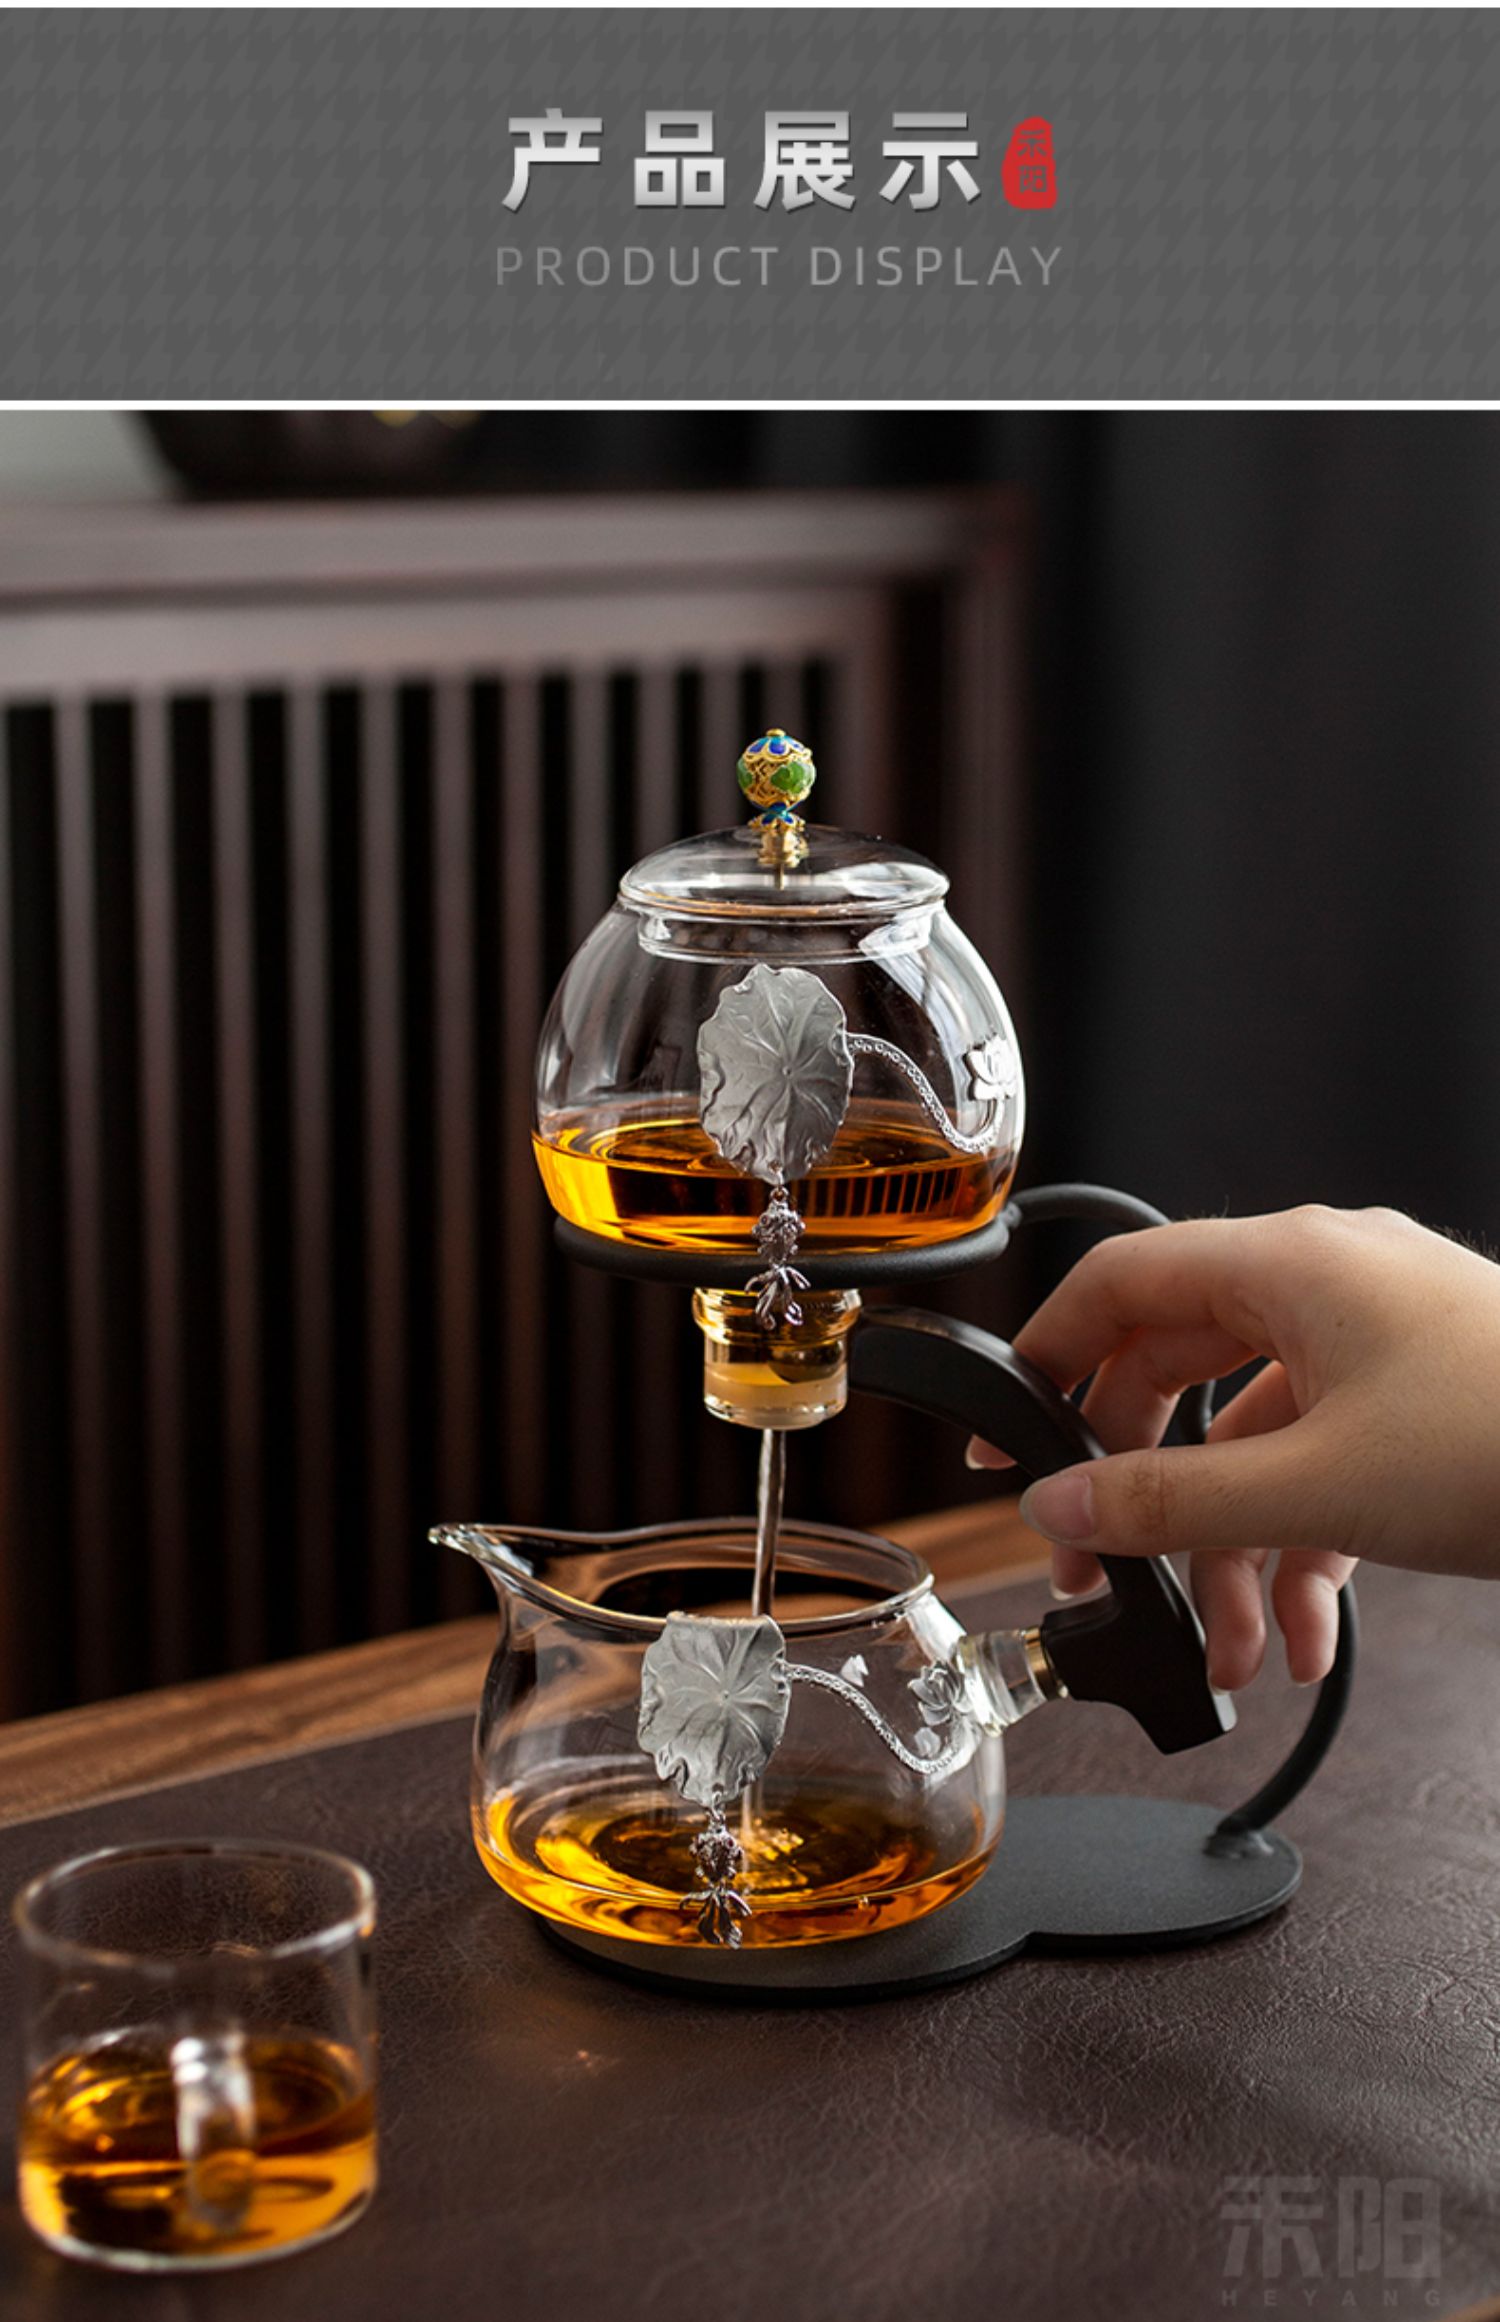 yicheng 云珑半全自动茶具功夫懒人茶具套装家用玻璃简约磁吸泡茶壶